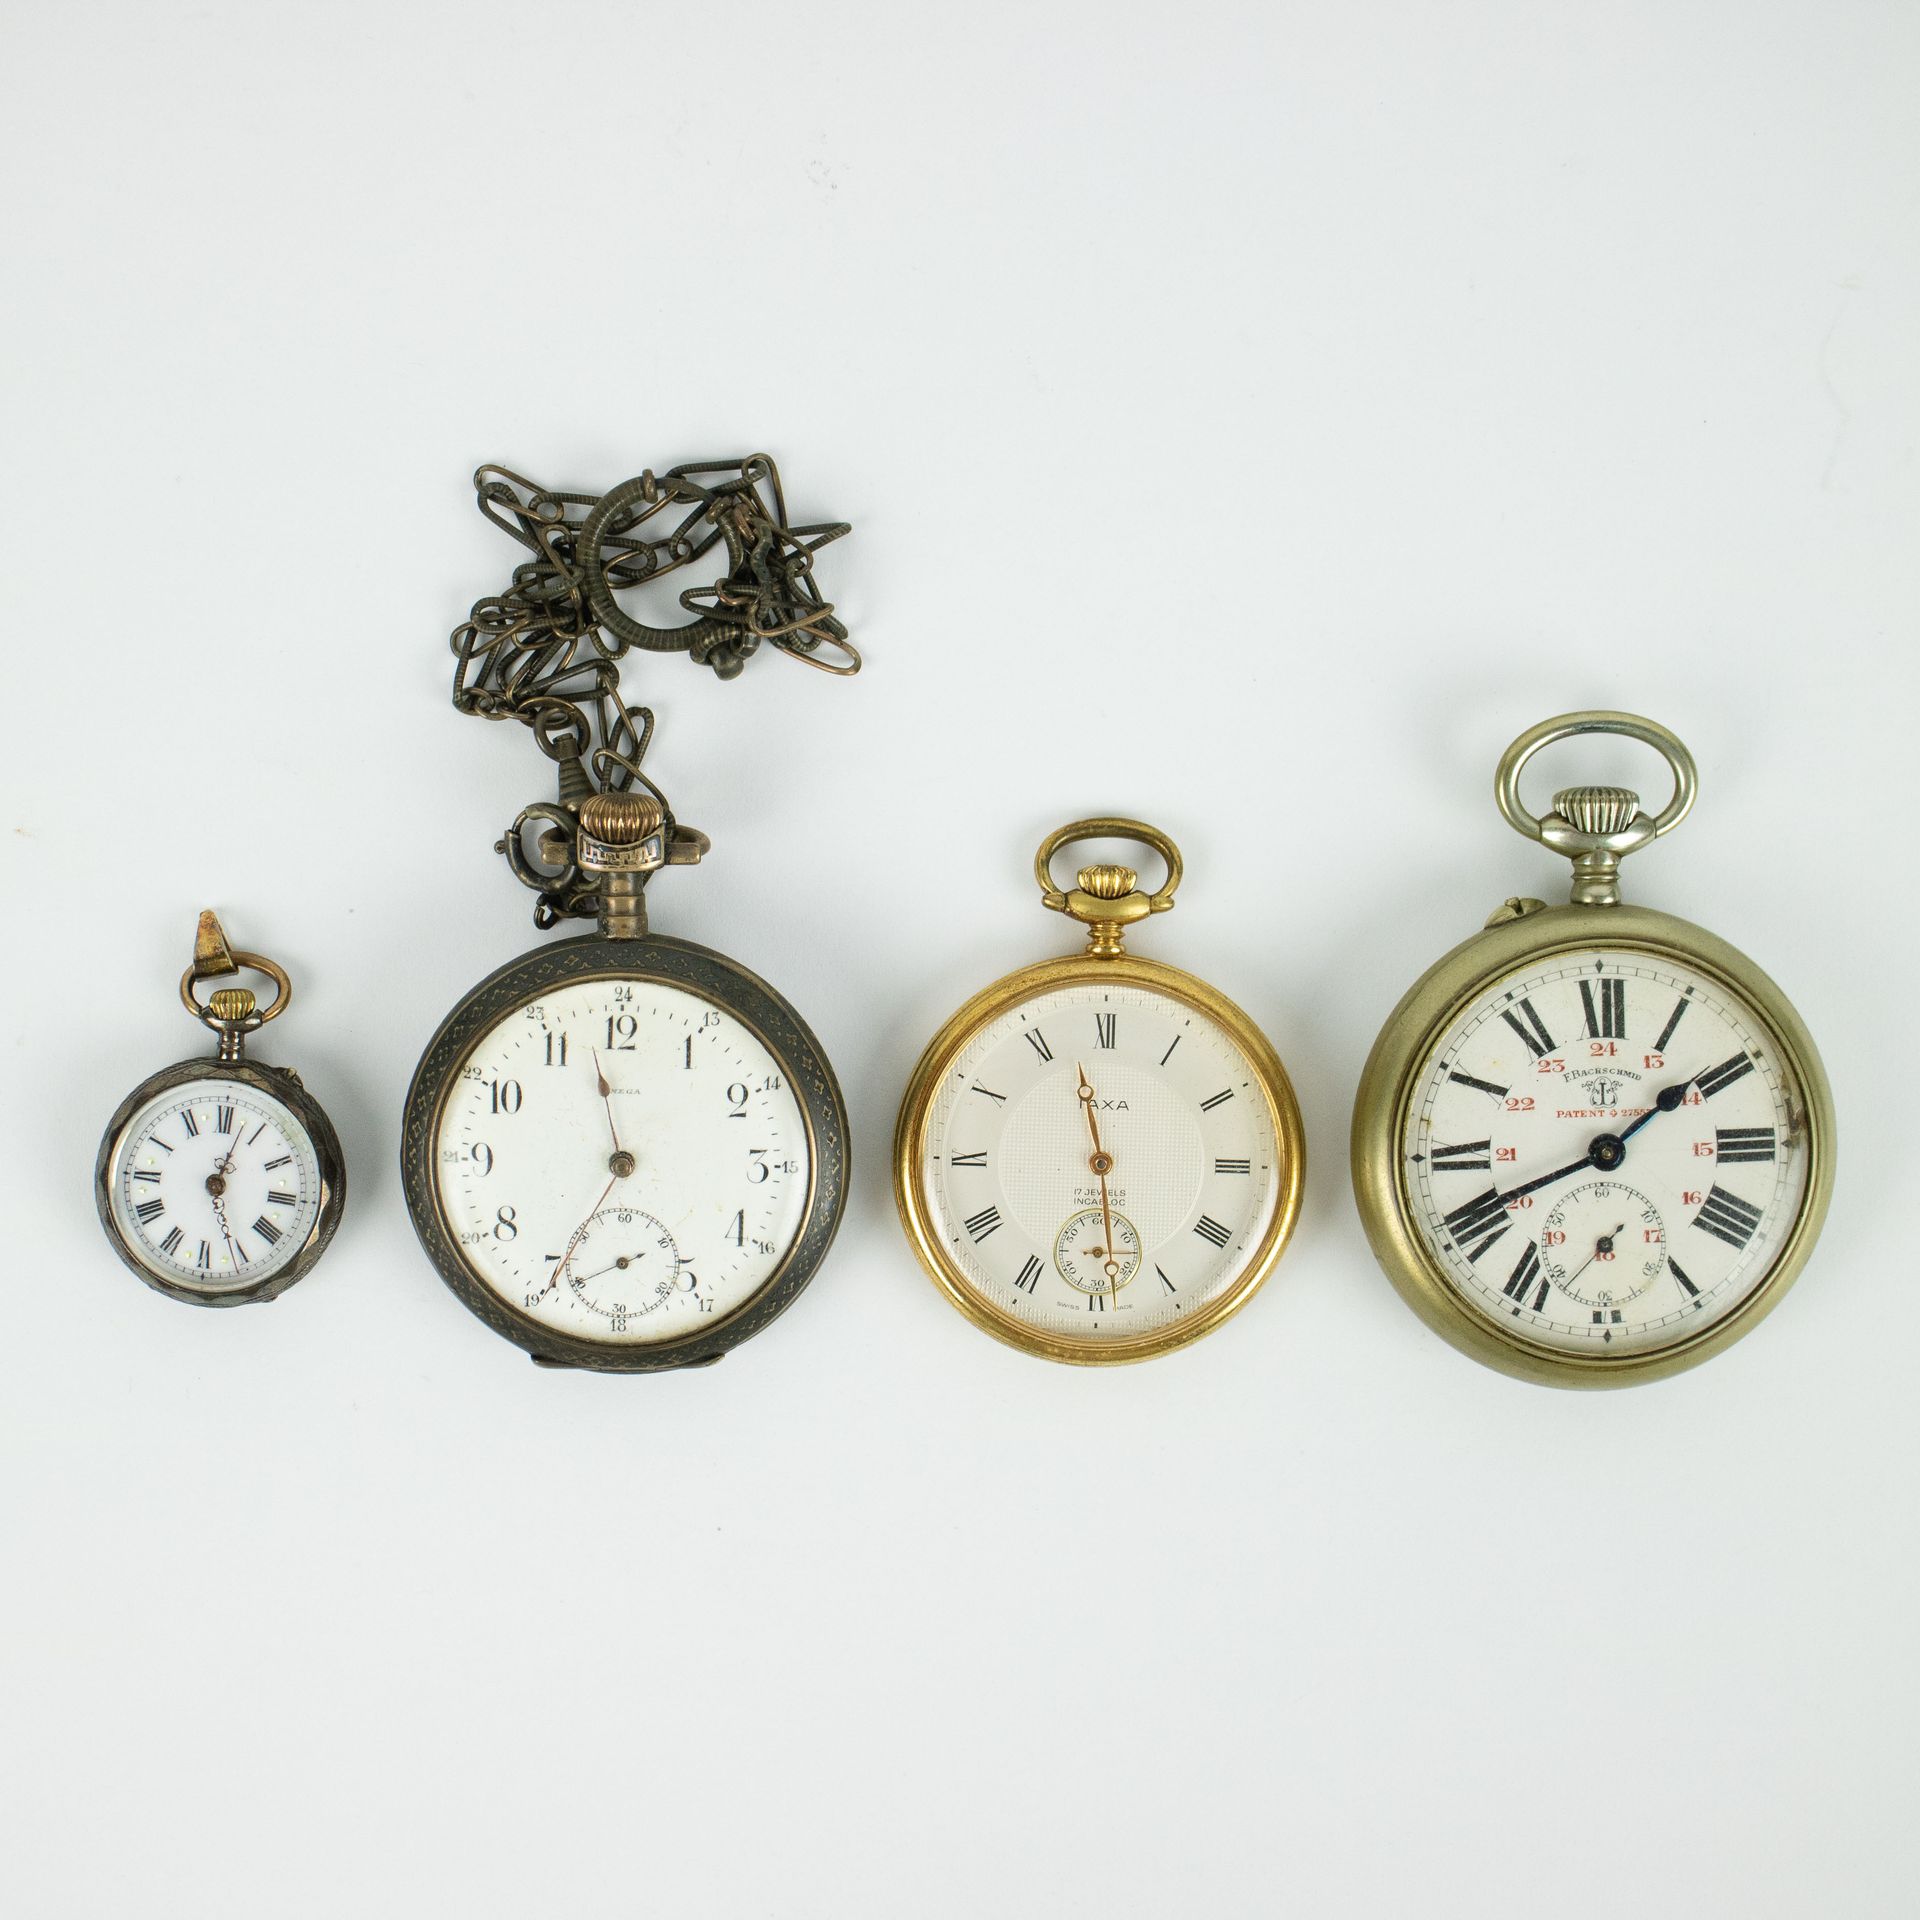 4 pocket watches A.O. A F. BACHSCHMID - 怀表 - 1900, IAXA - 怀表 瑞士制造.Lot van 4 zakh&hellip;